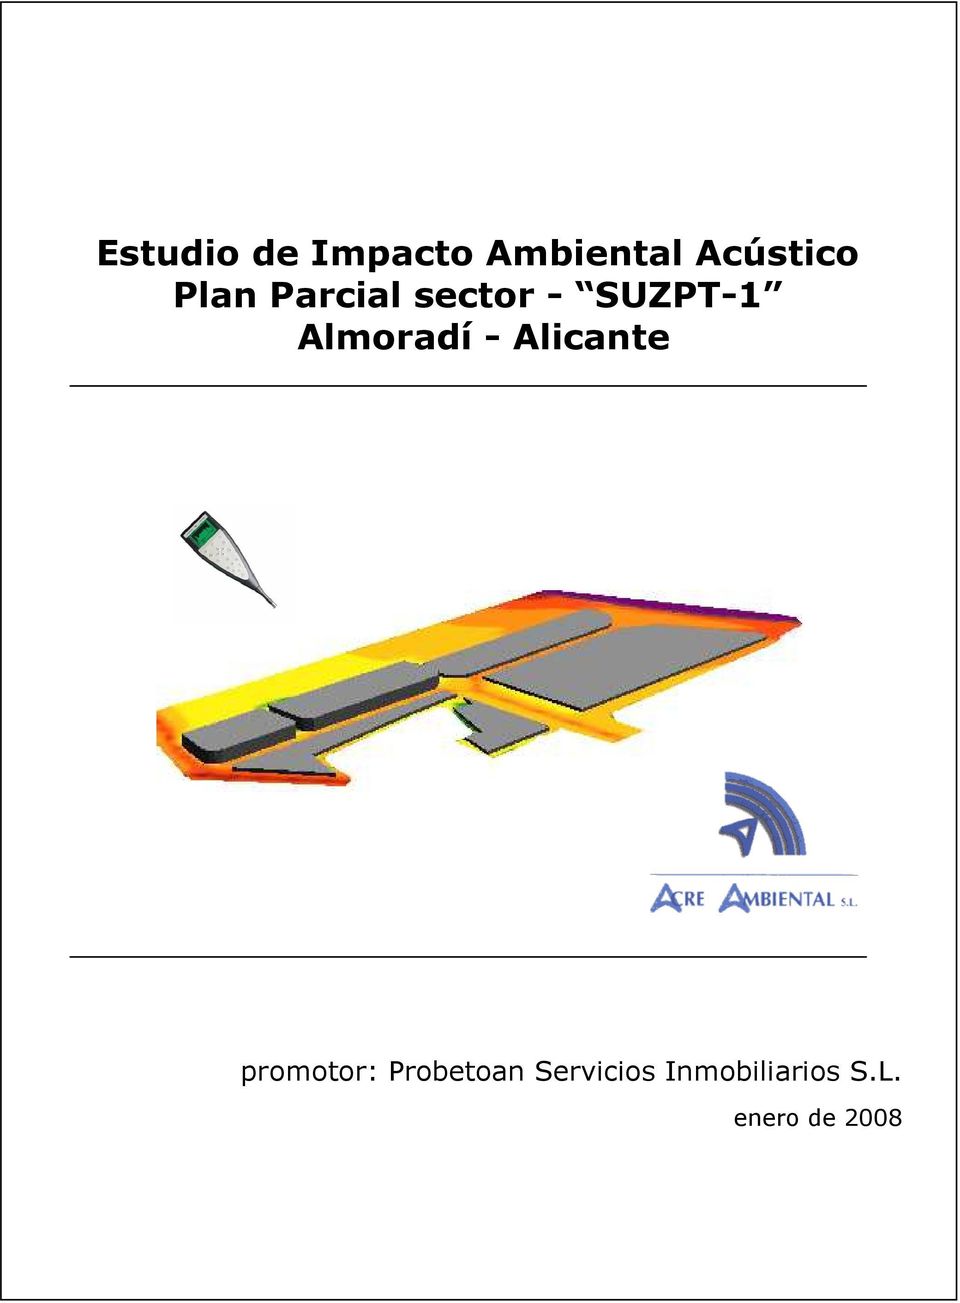 Almoradí - Alicante promotor: